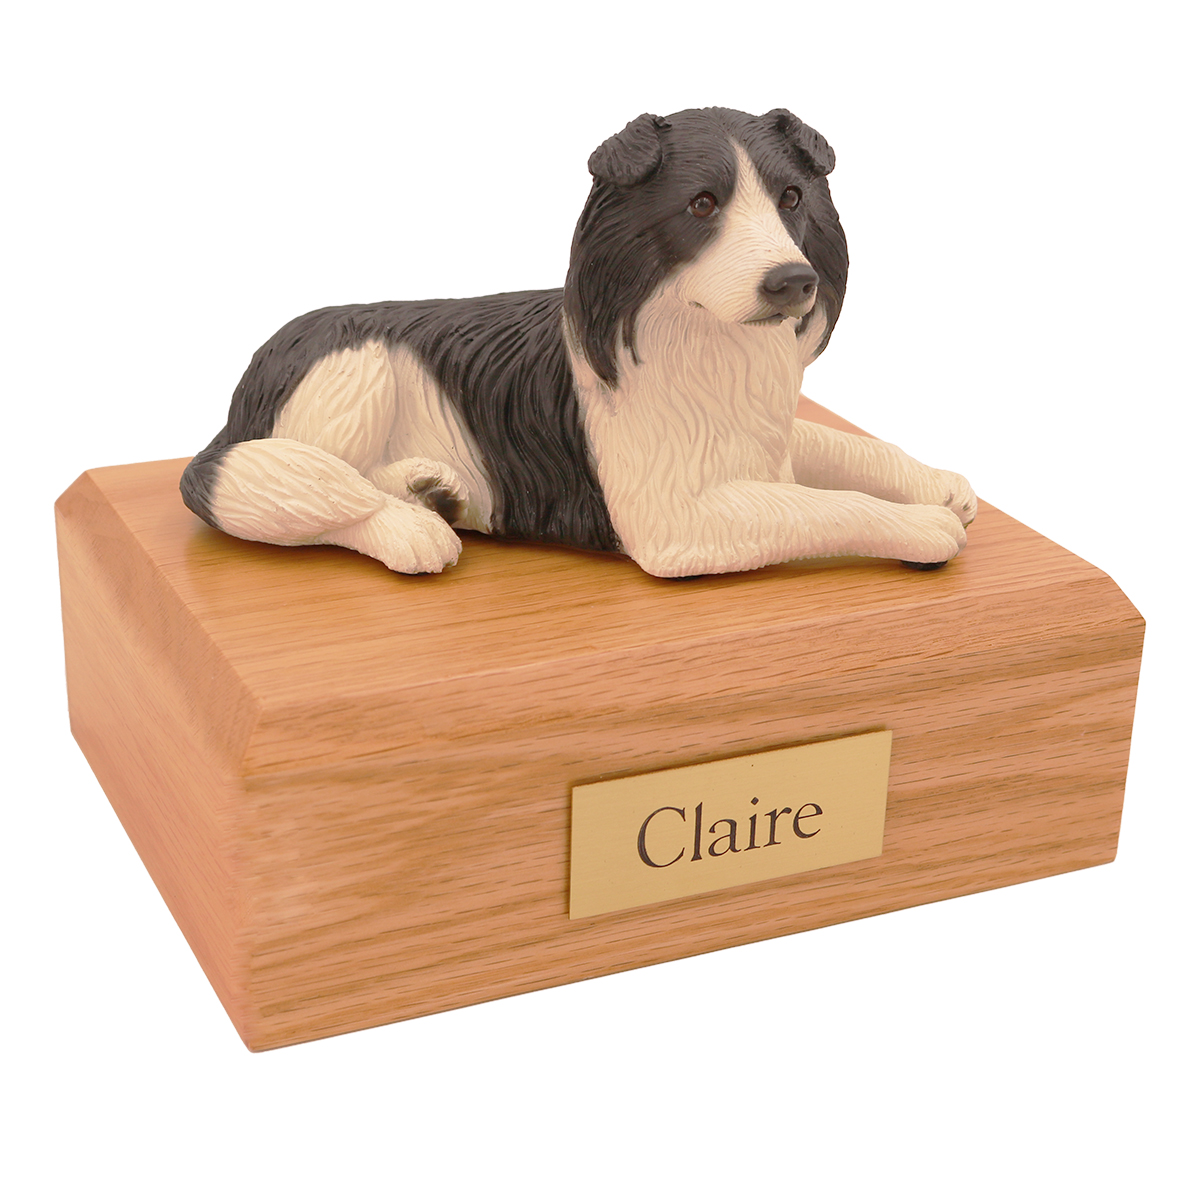 Dog, Border Collie - Figurine Urn